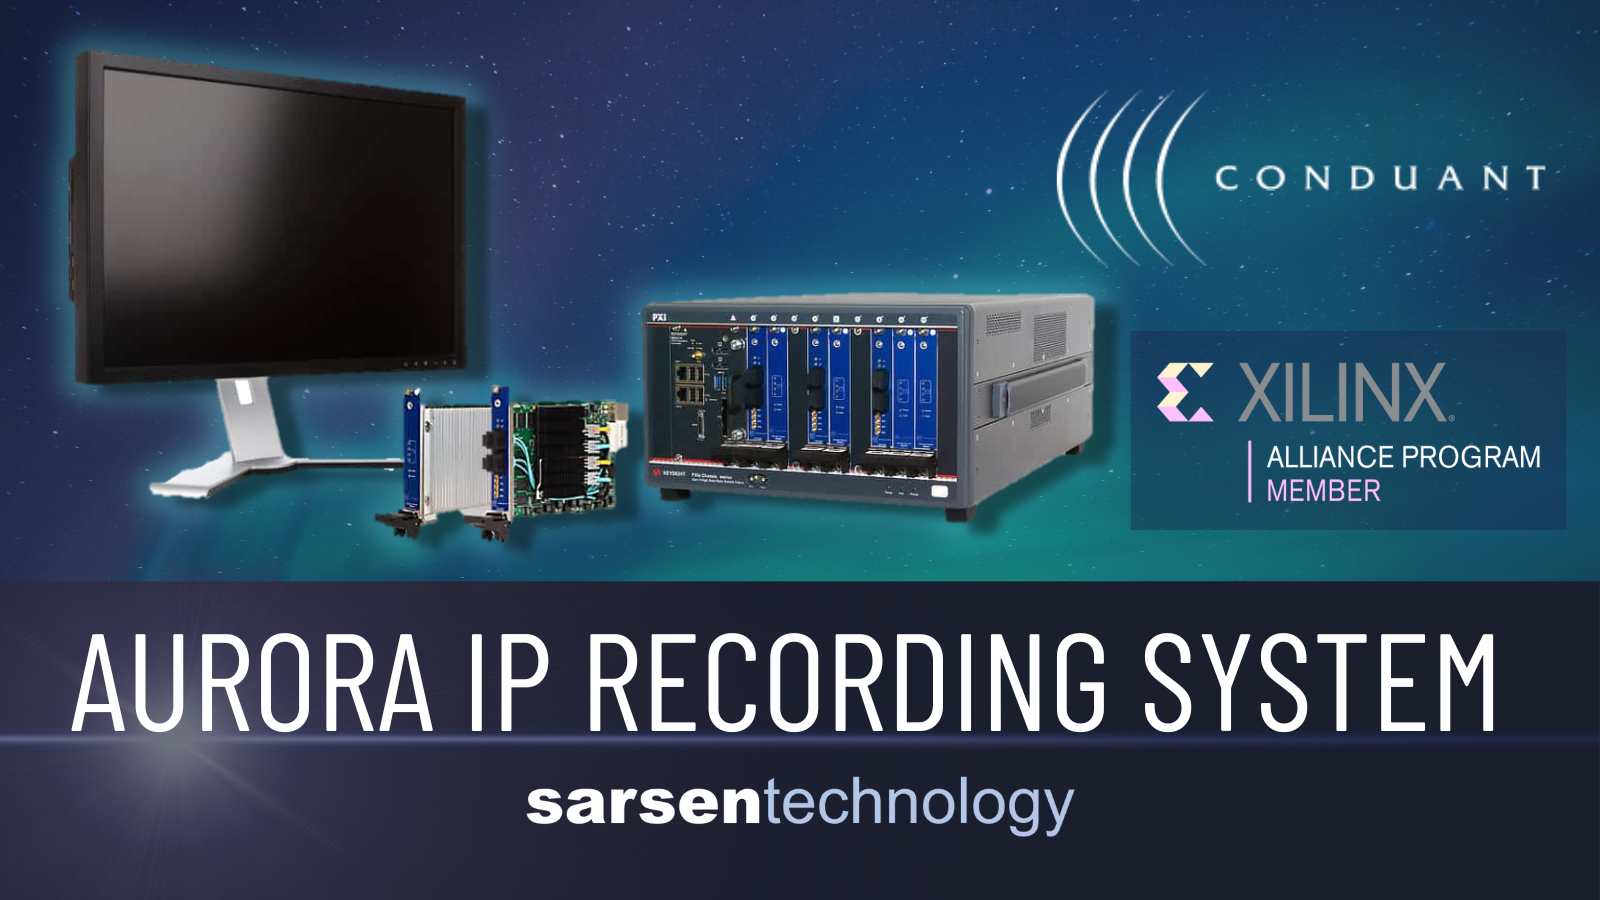 Modular Recording System with Xilinx Aurora Capability